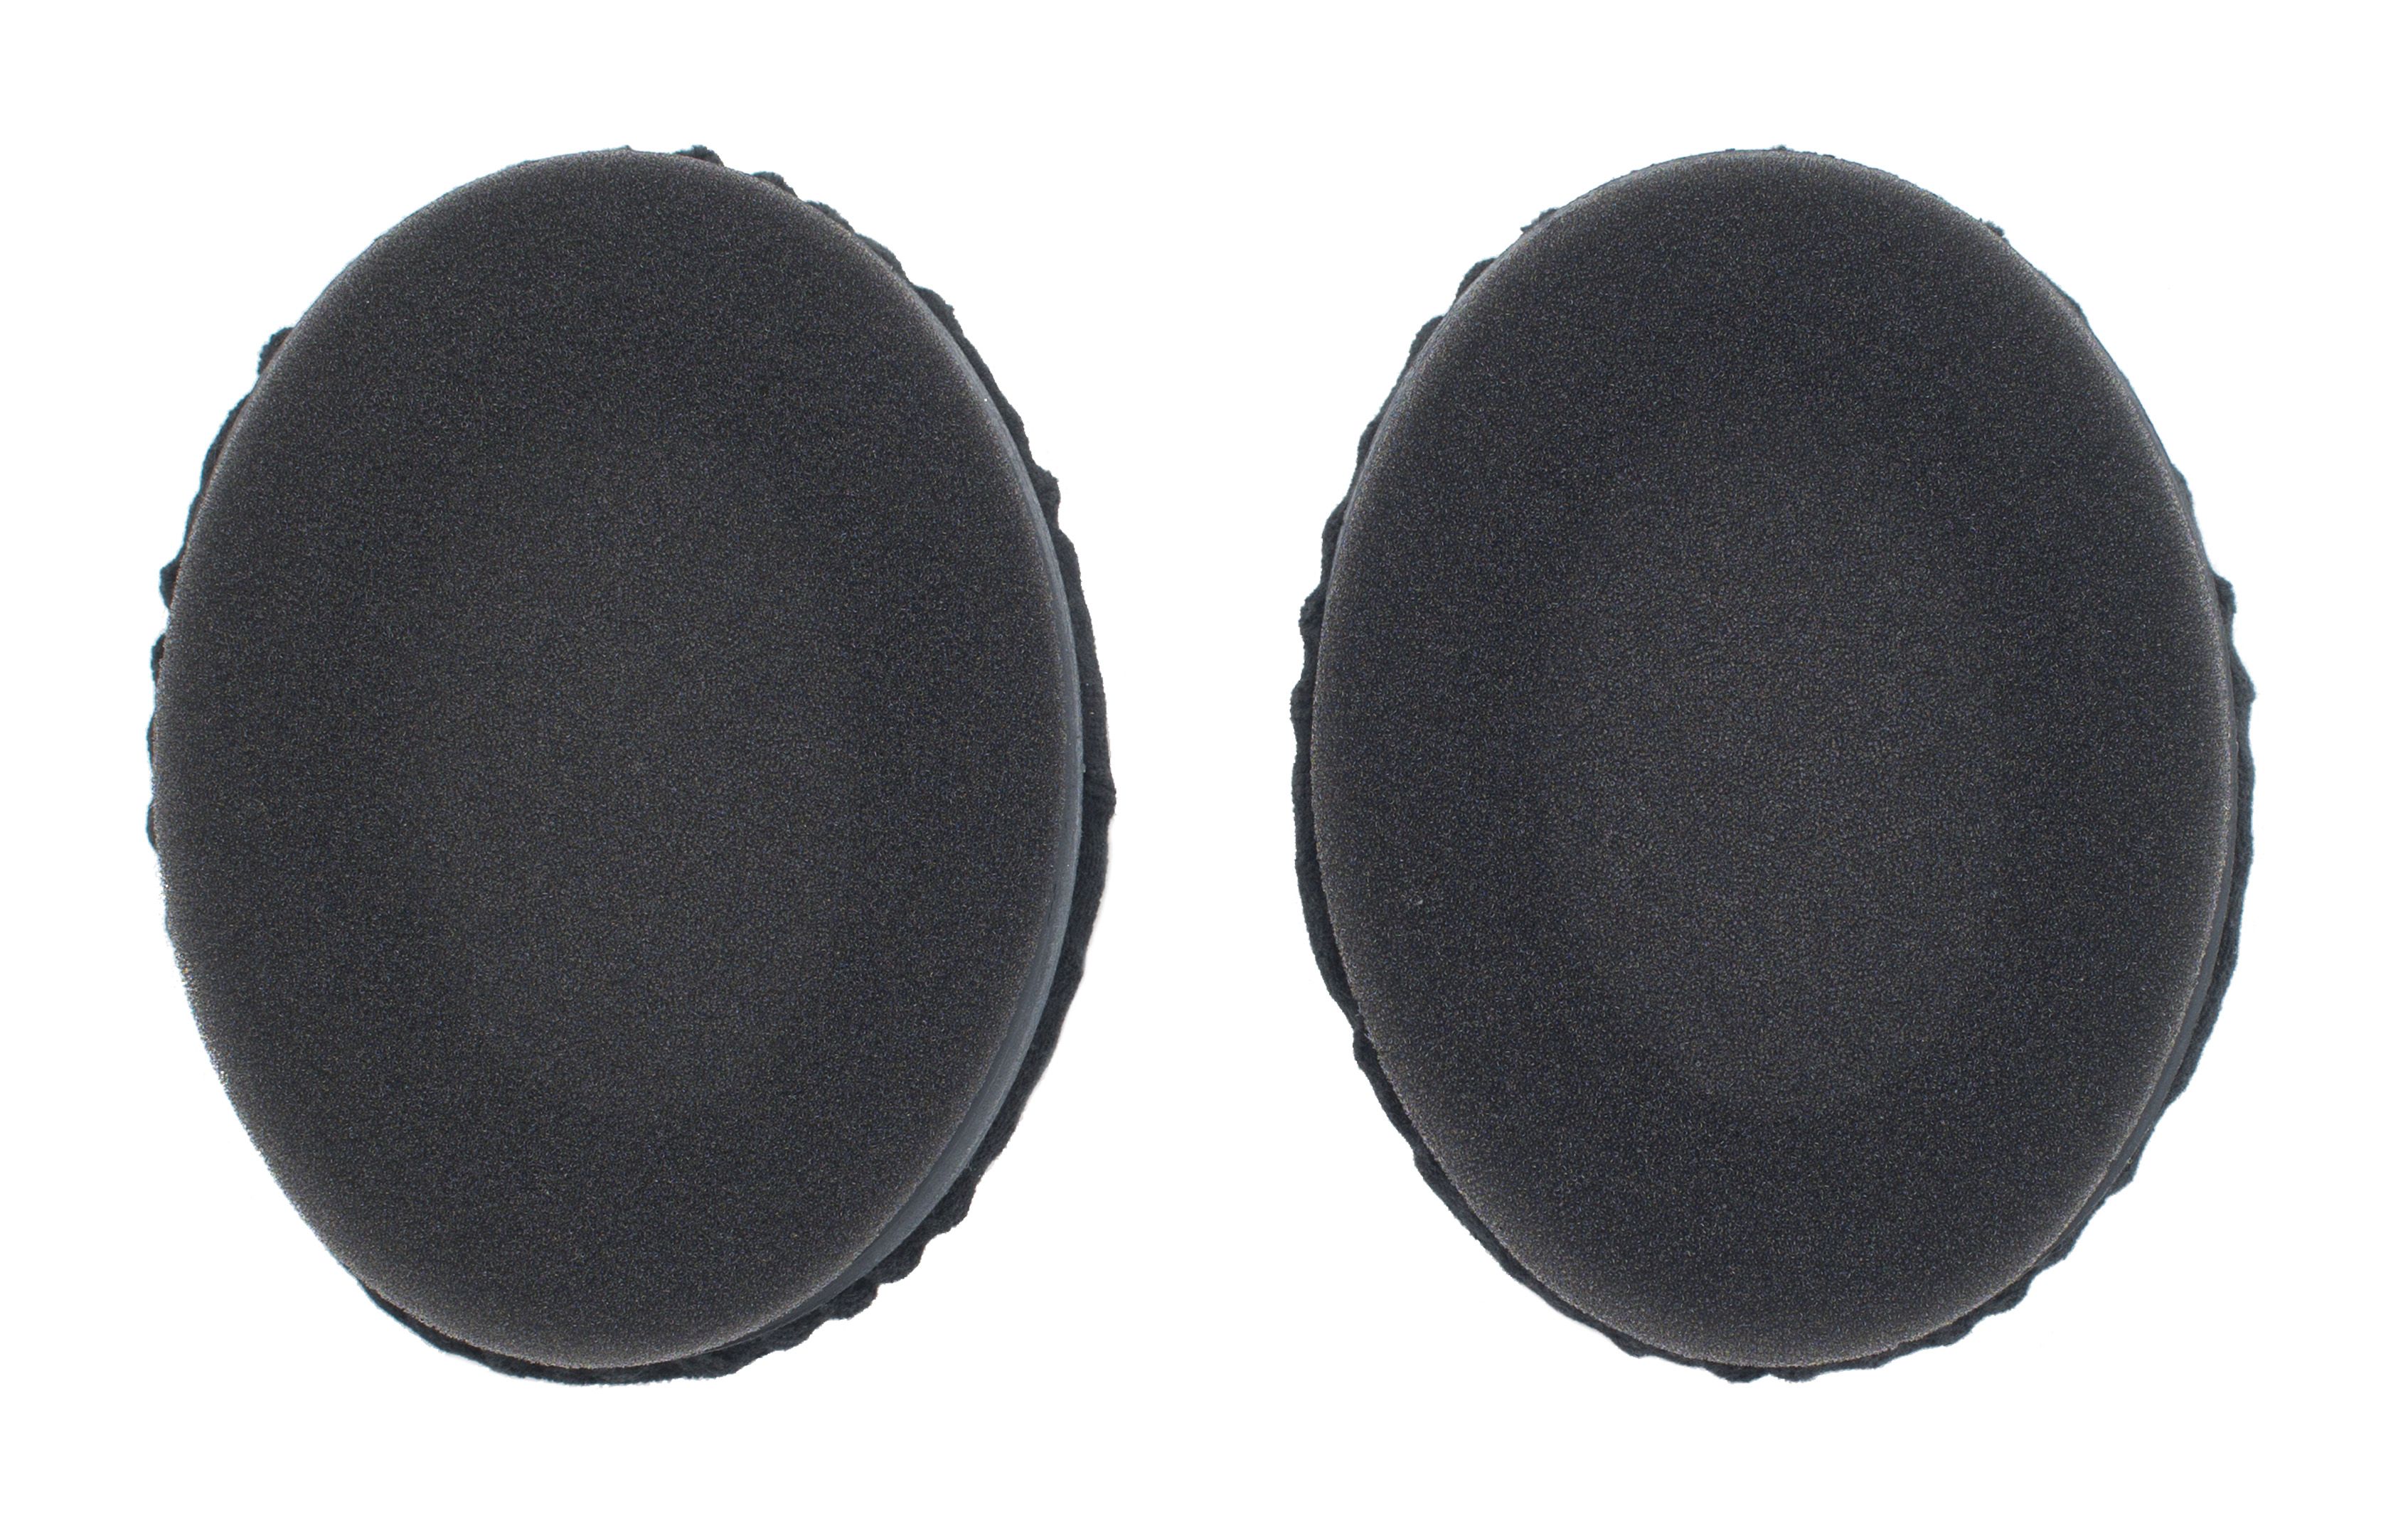 Genuine Replacement Ear pads for SENNHEISER HD650 HD600 HD580 HD565 ...